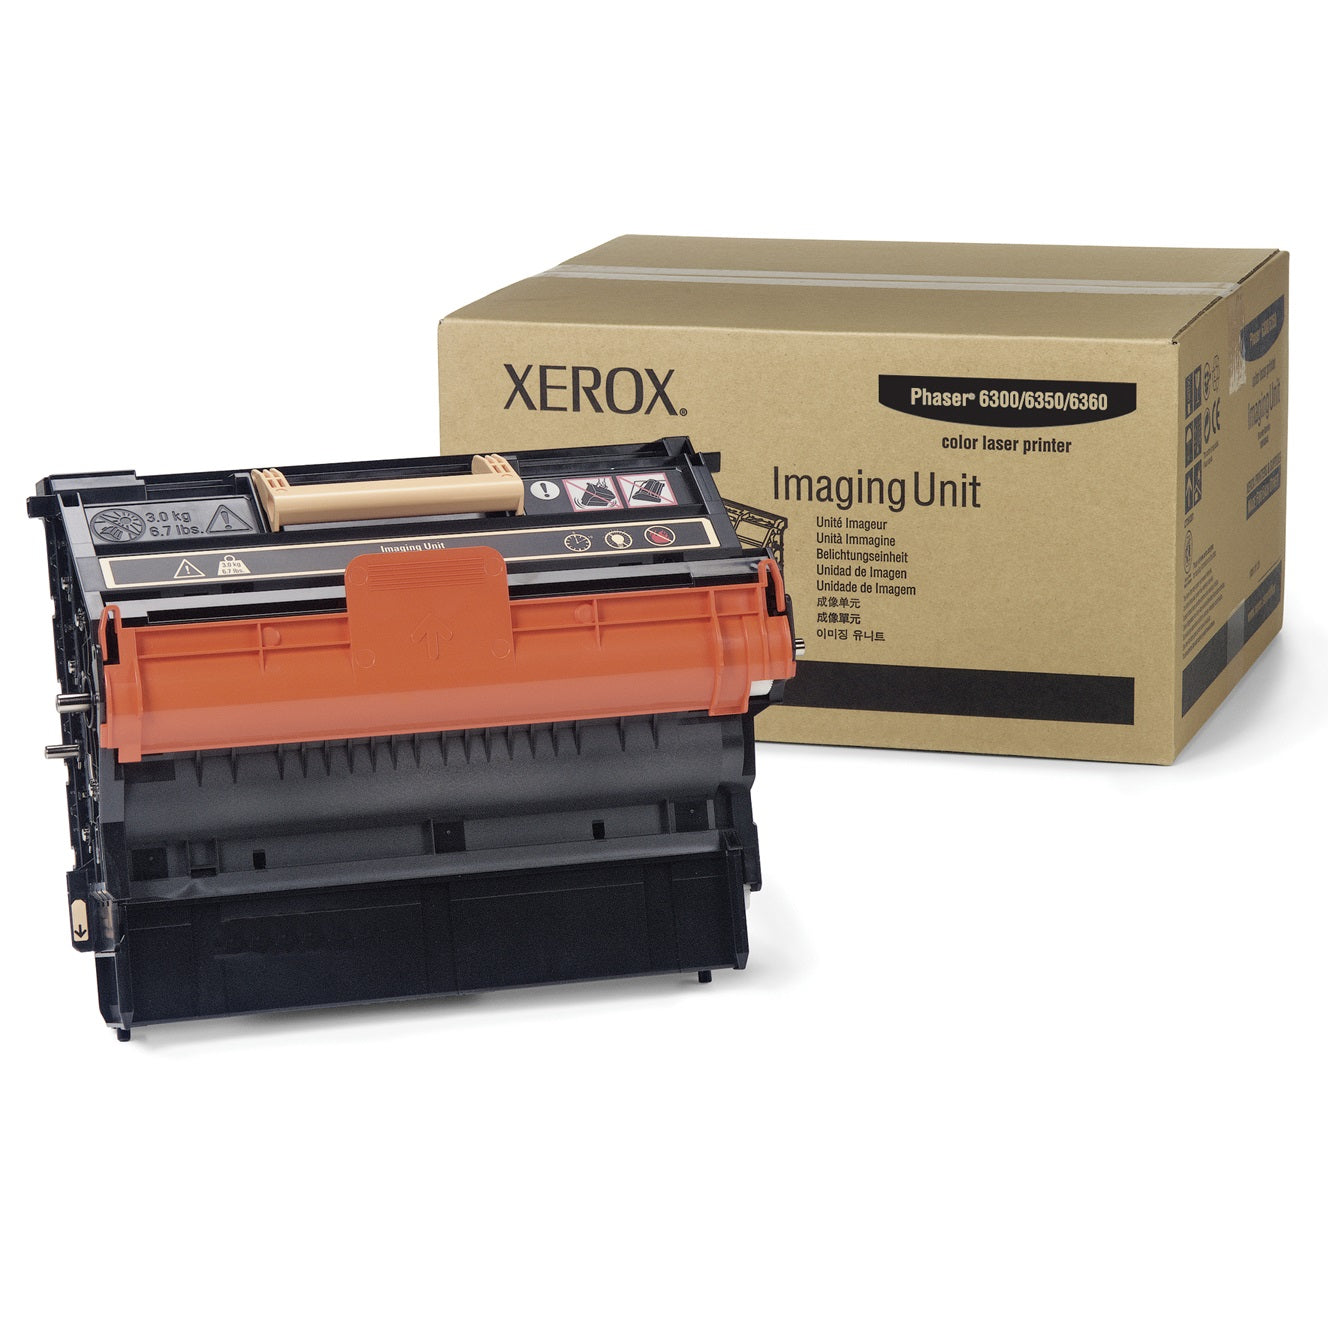 Absolute Toner Genuine Xerox 108R00645 Imaging Unit for Phaser 6300/6350/6360 Printer | Original OEM Original Xerox Cartridges